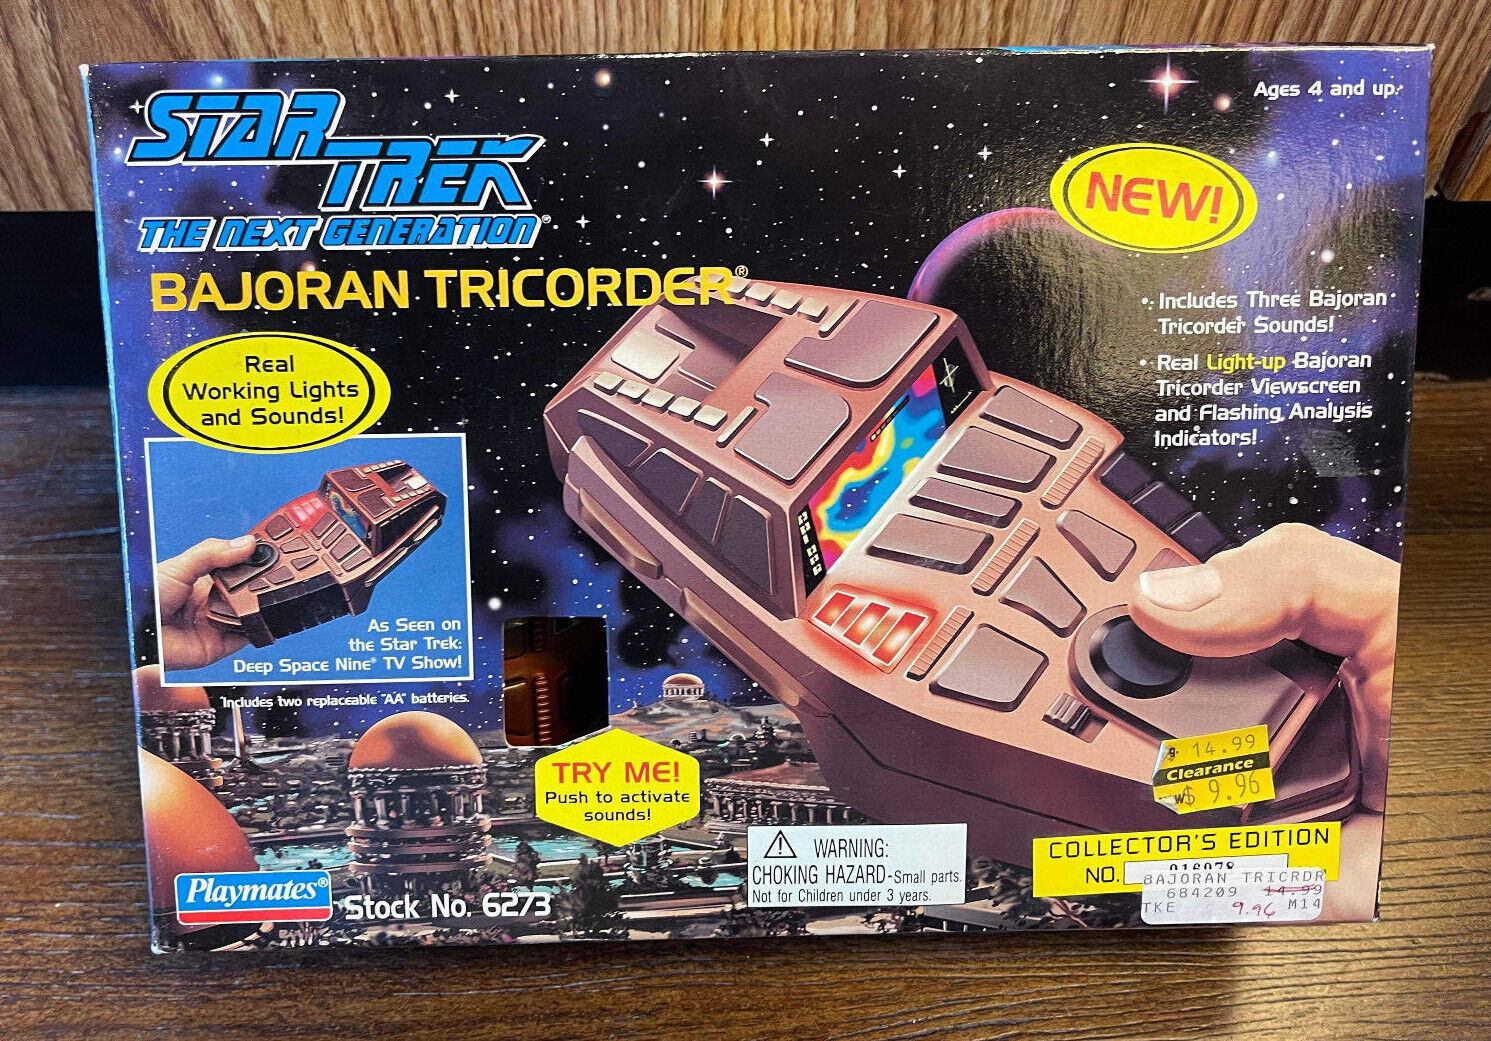 Star Trek Bajoran Tricorder by Playmates Toy New in Original Box